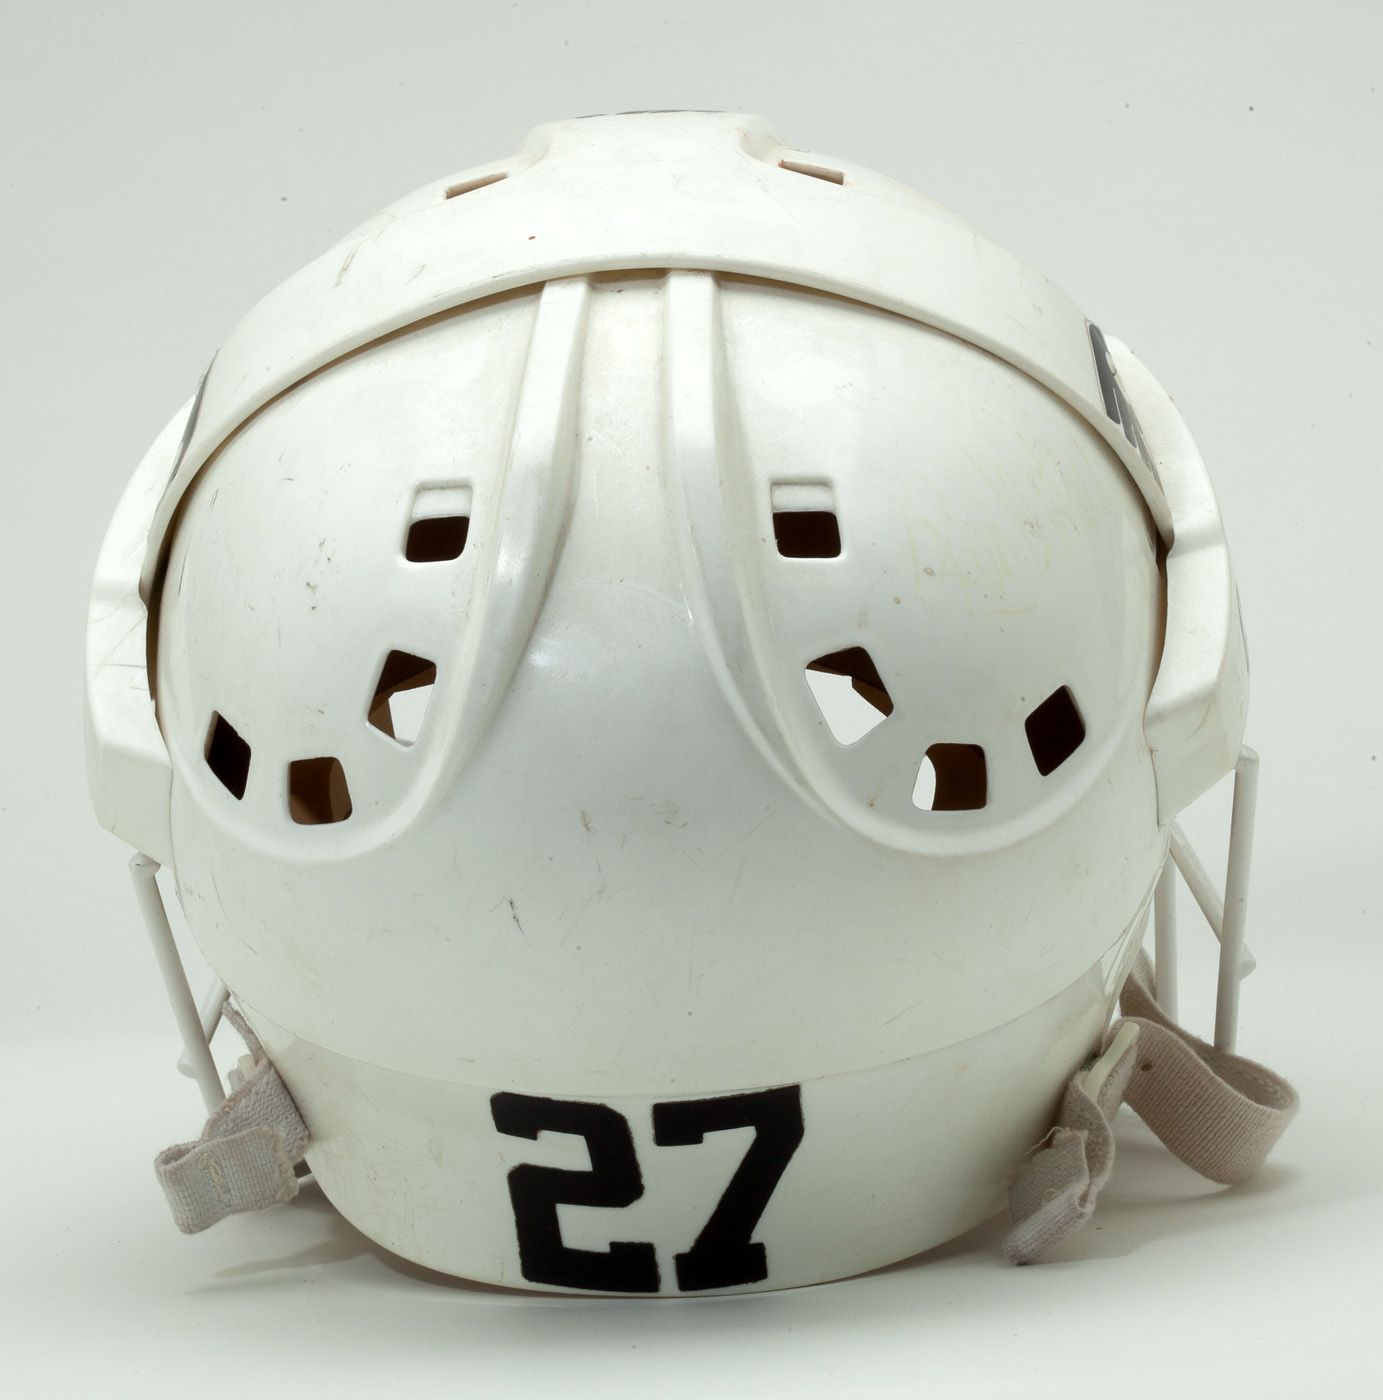 Ron Hextall Philadelphia Flyers Autographed Kick Save 16x20 Photo - NHL  Auctions